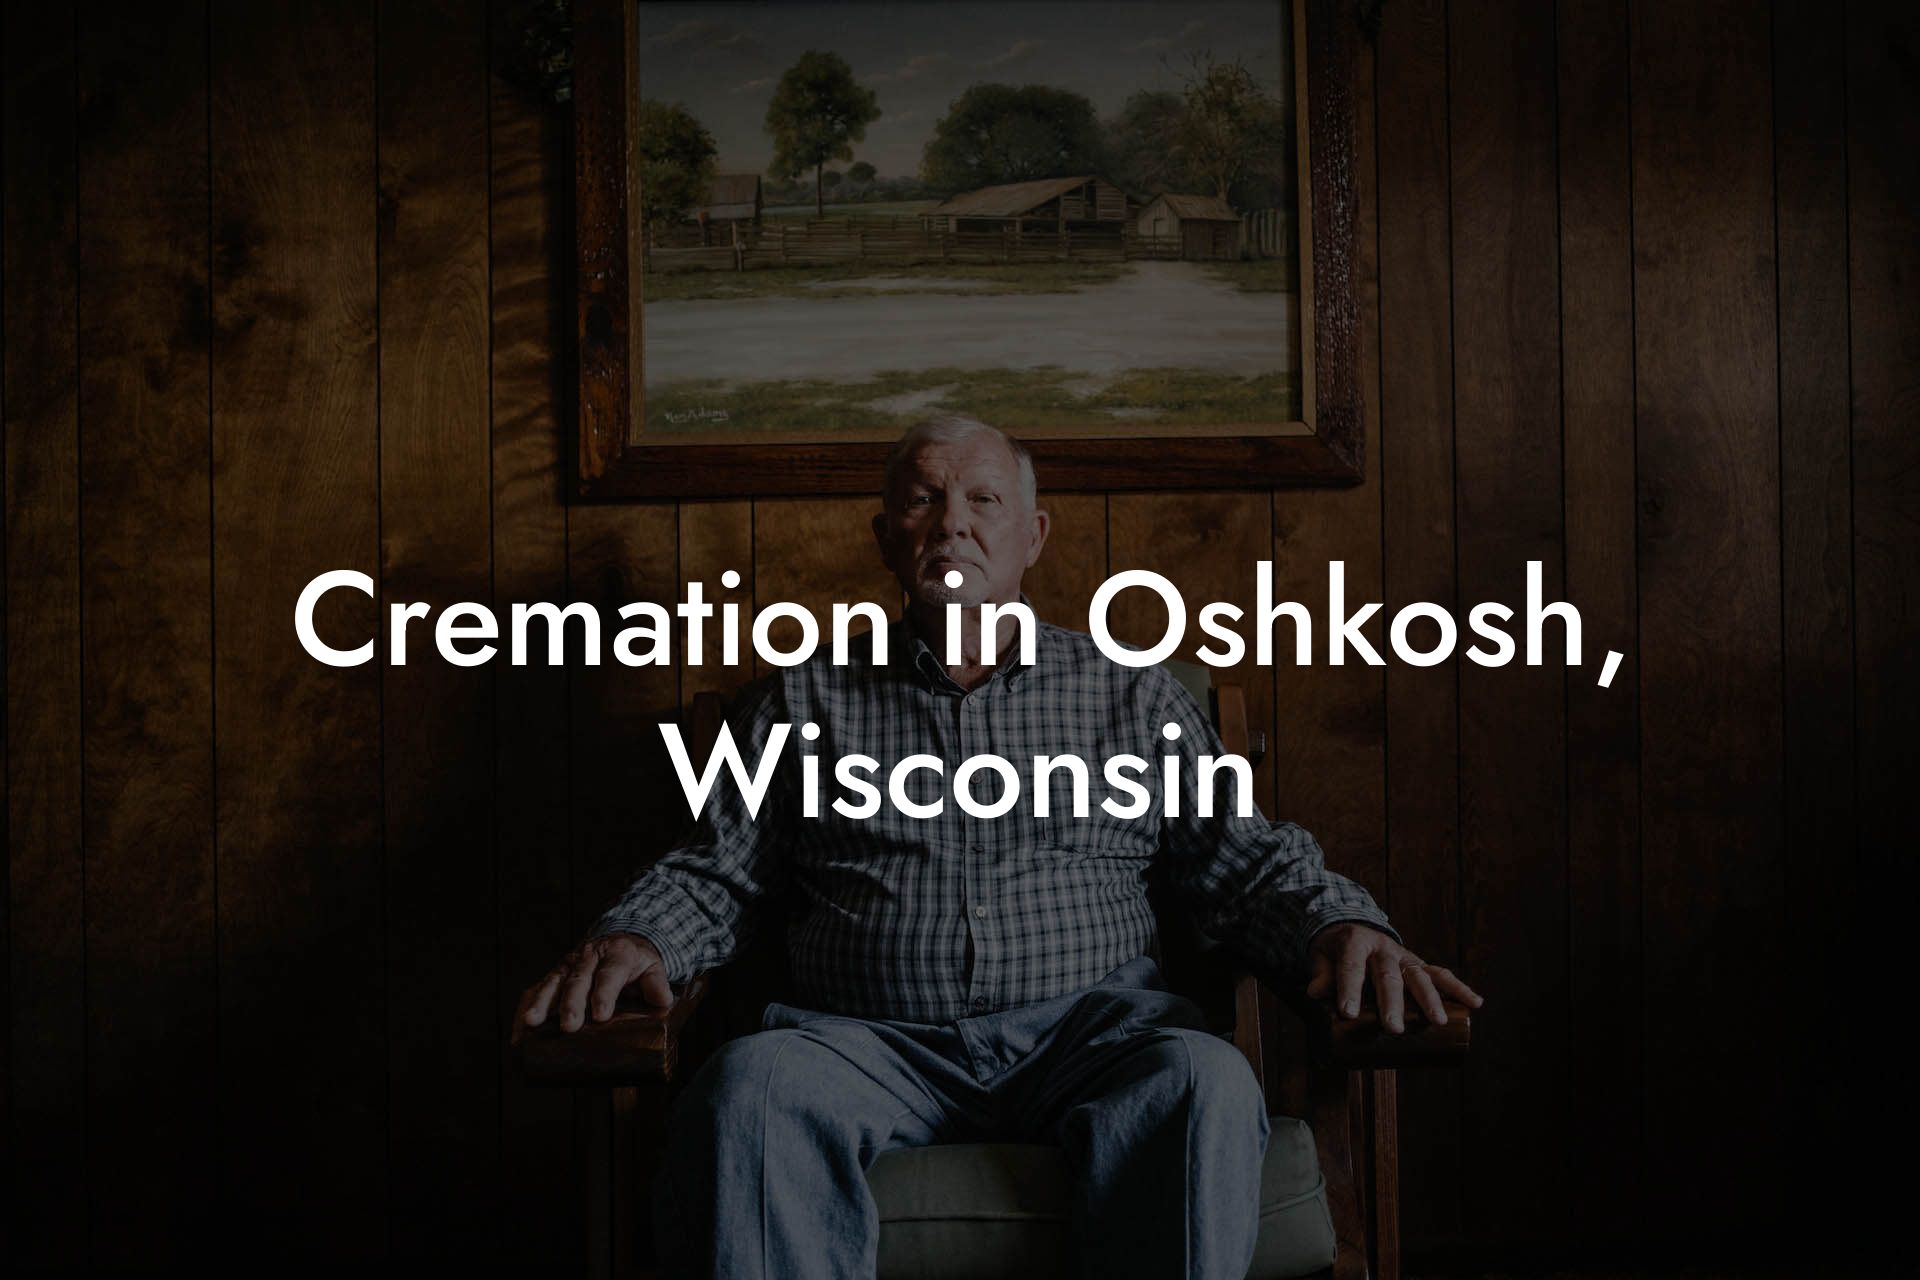 Cremation in Oshkosh, Wisconsin